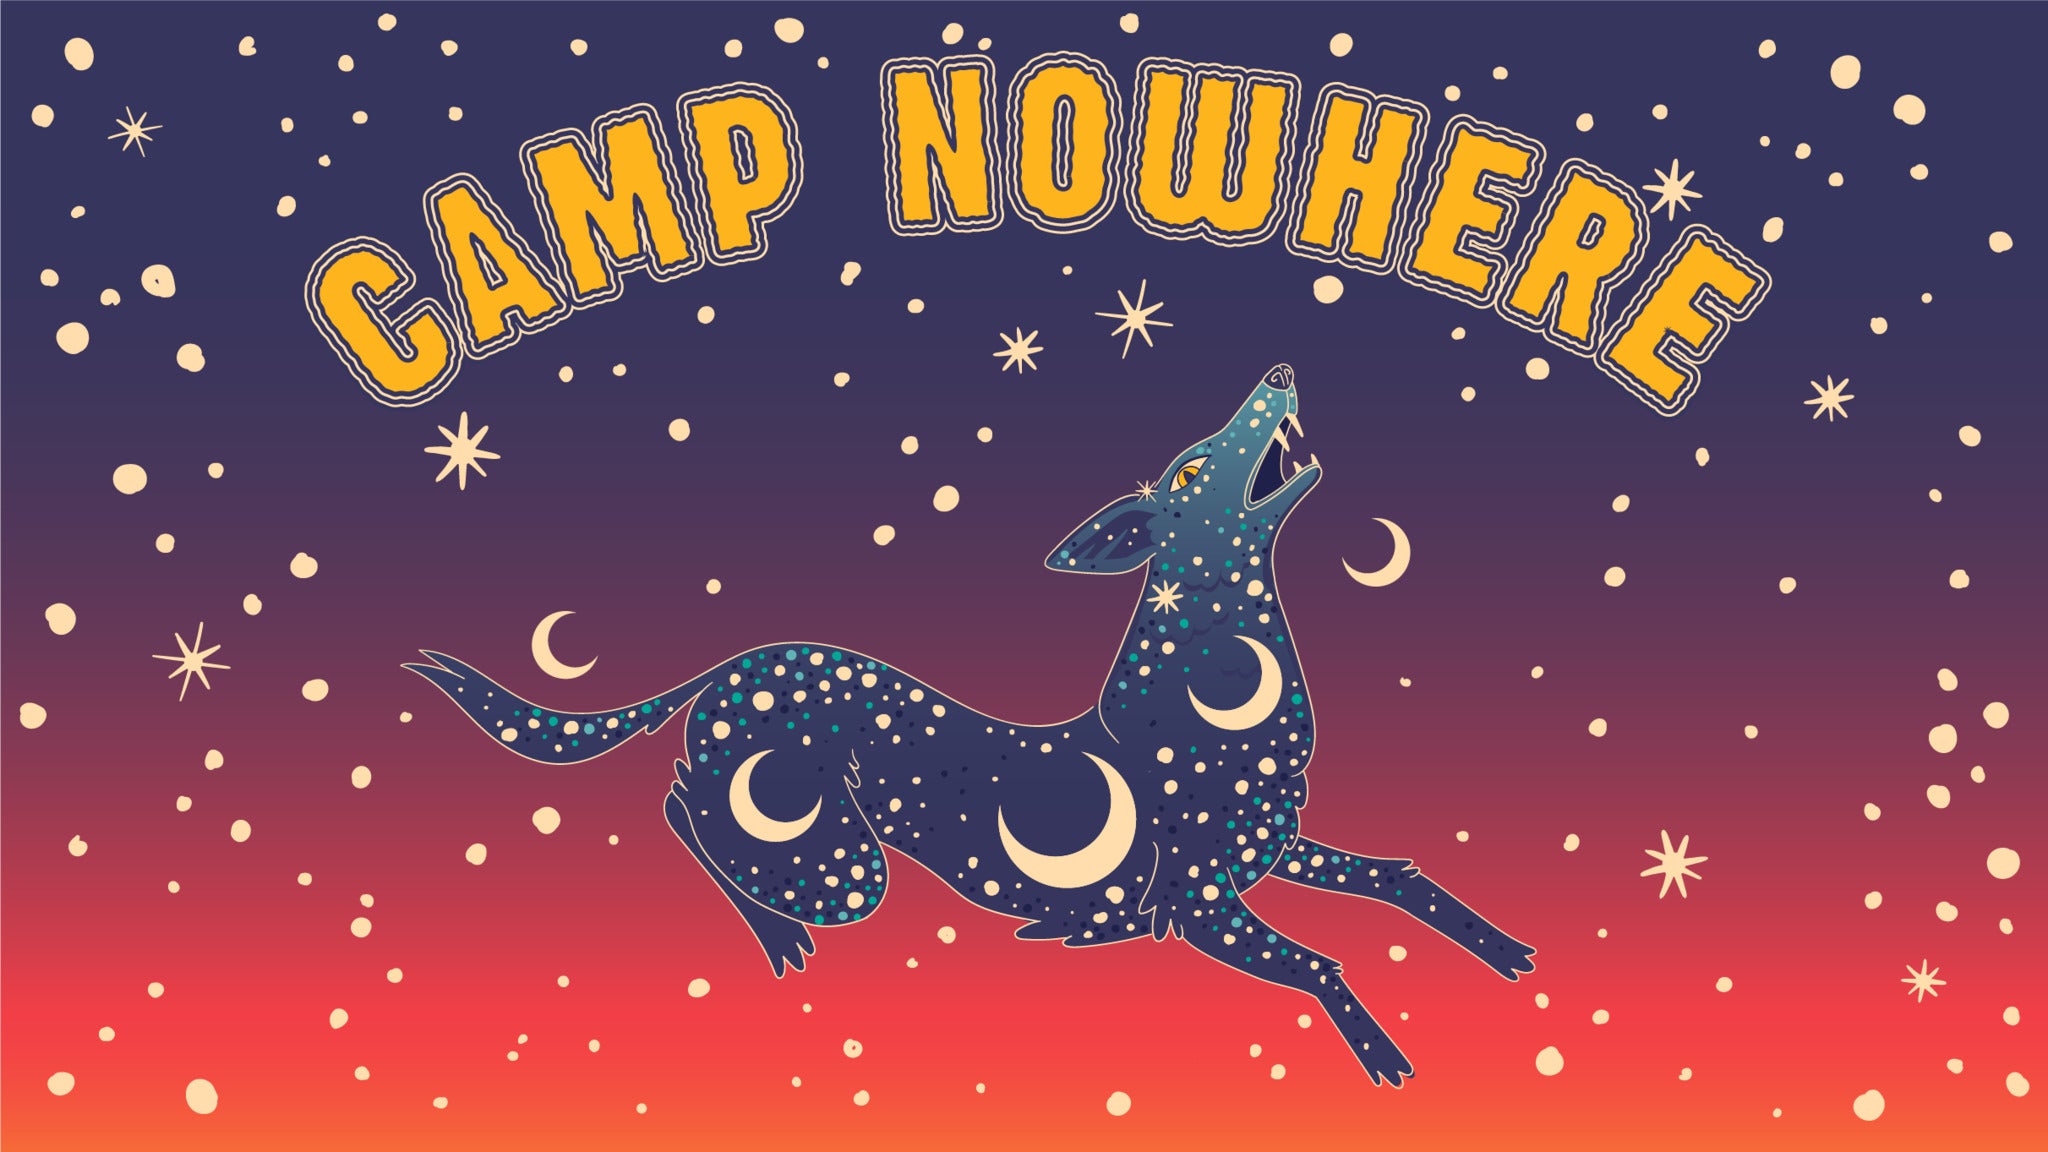 Camp Nowhere 2022: Porter Robinson, Lane 8, Nora En Pure & Fletcher in Austin promo photo for Exclusive presale offer code